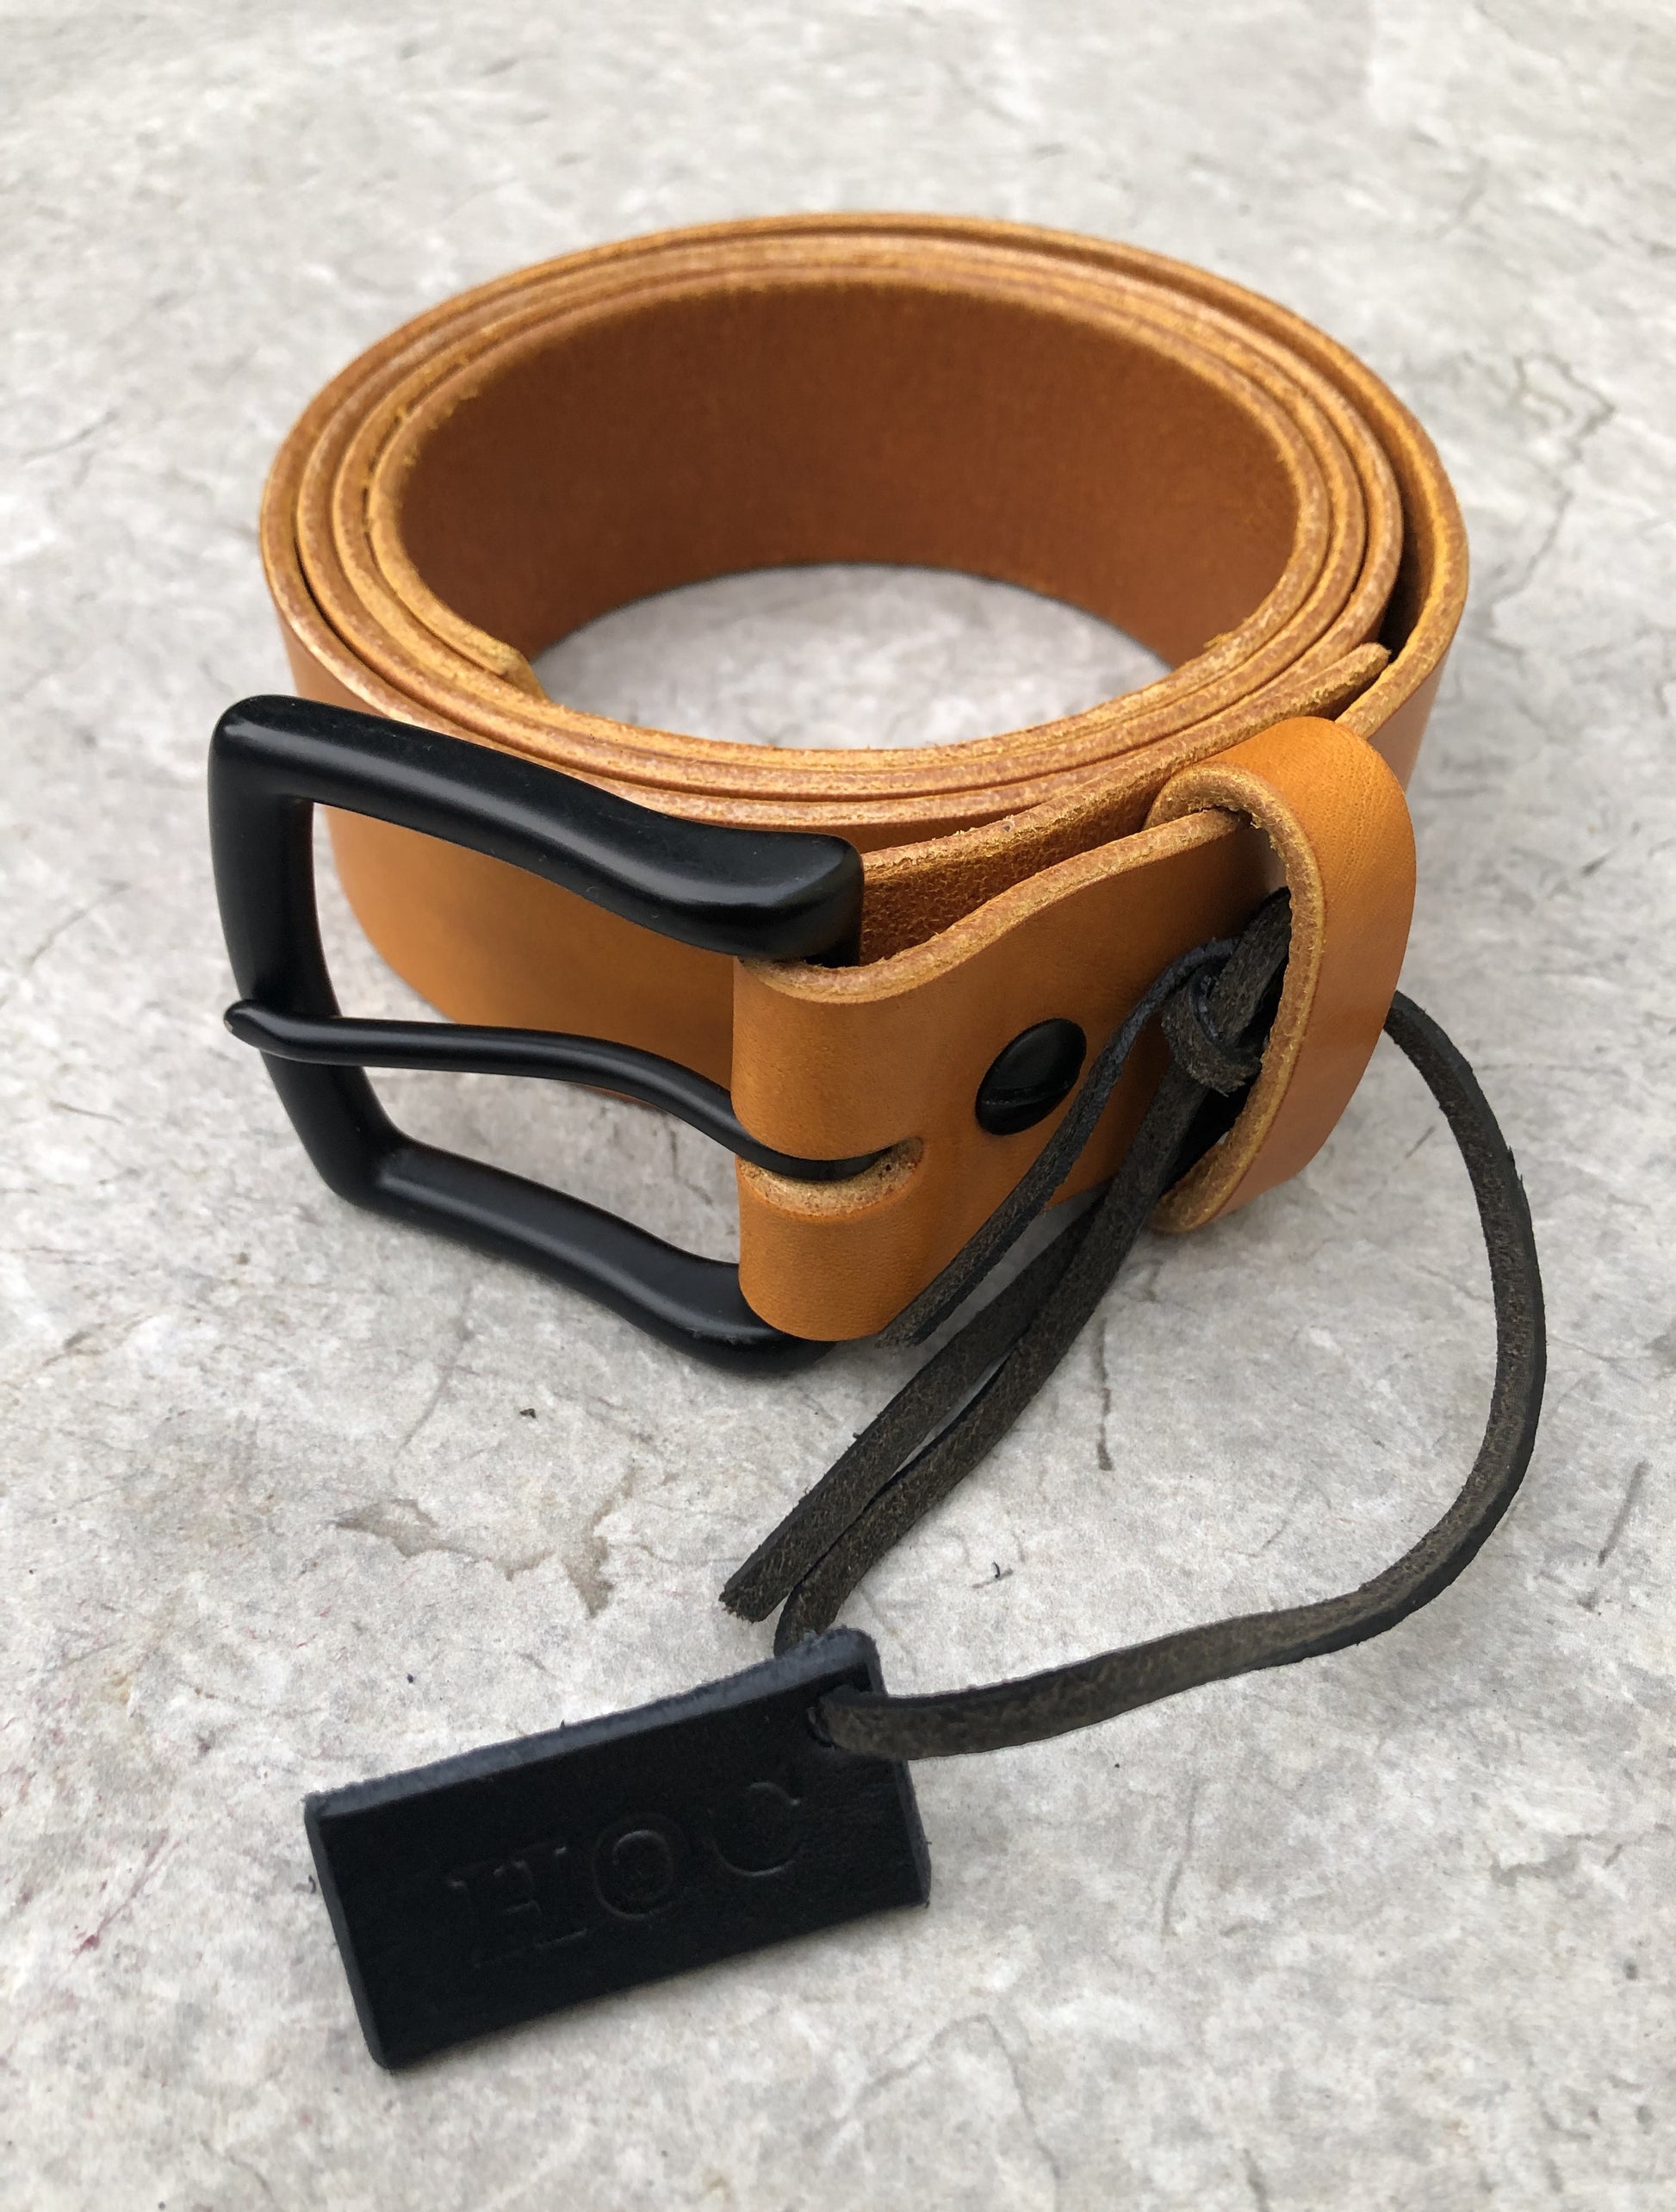 38mm Full Grain Veg Tan Leather Belt With Detachable Buckle - 1 5